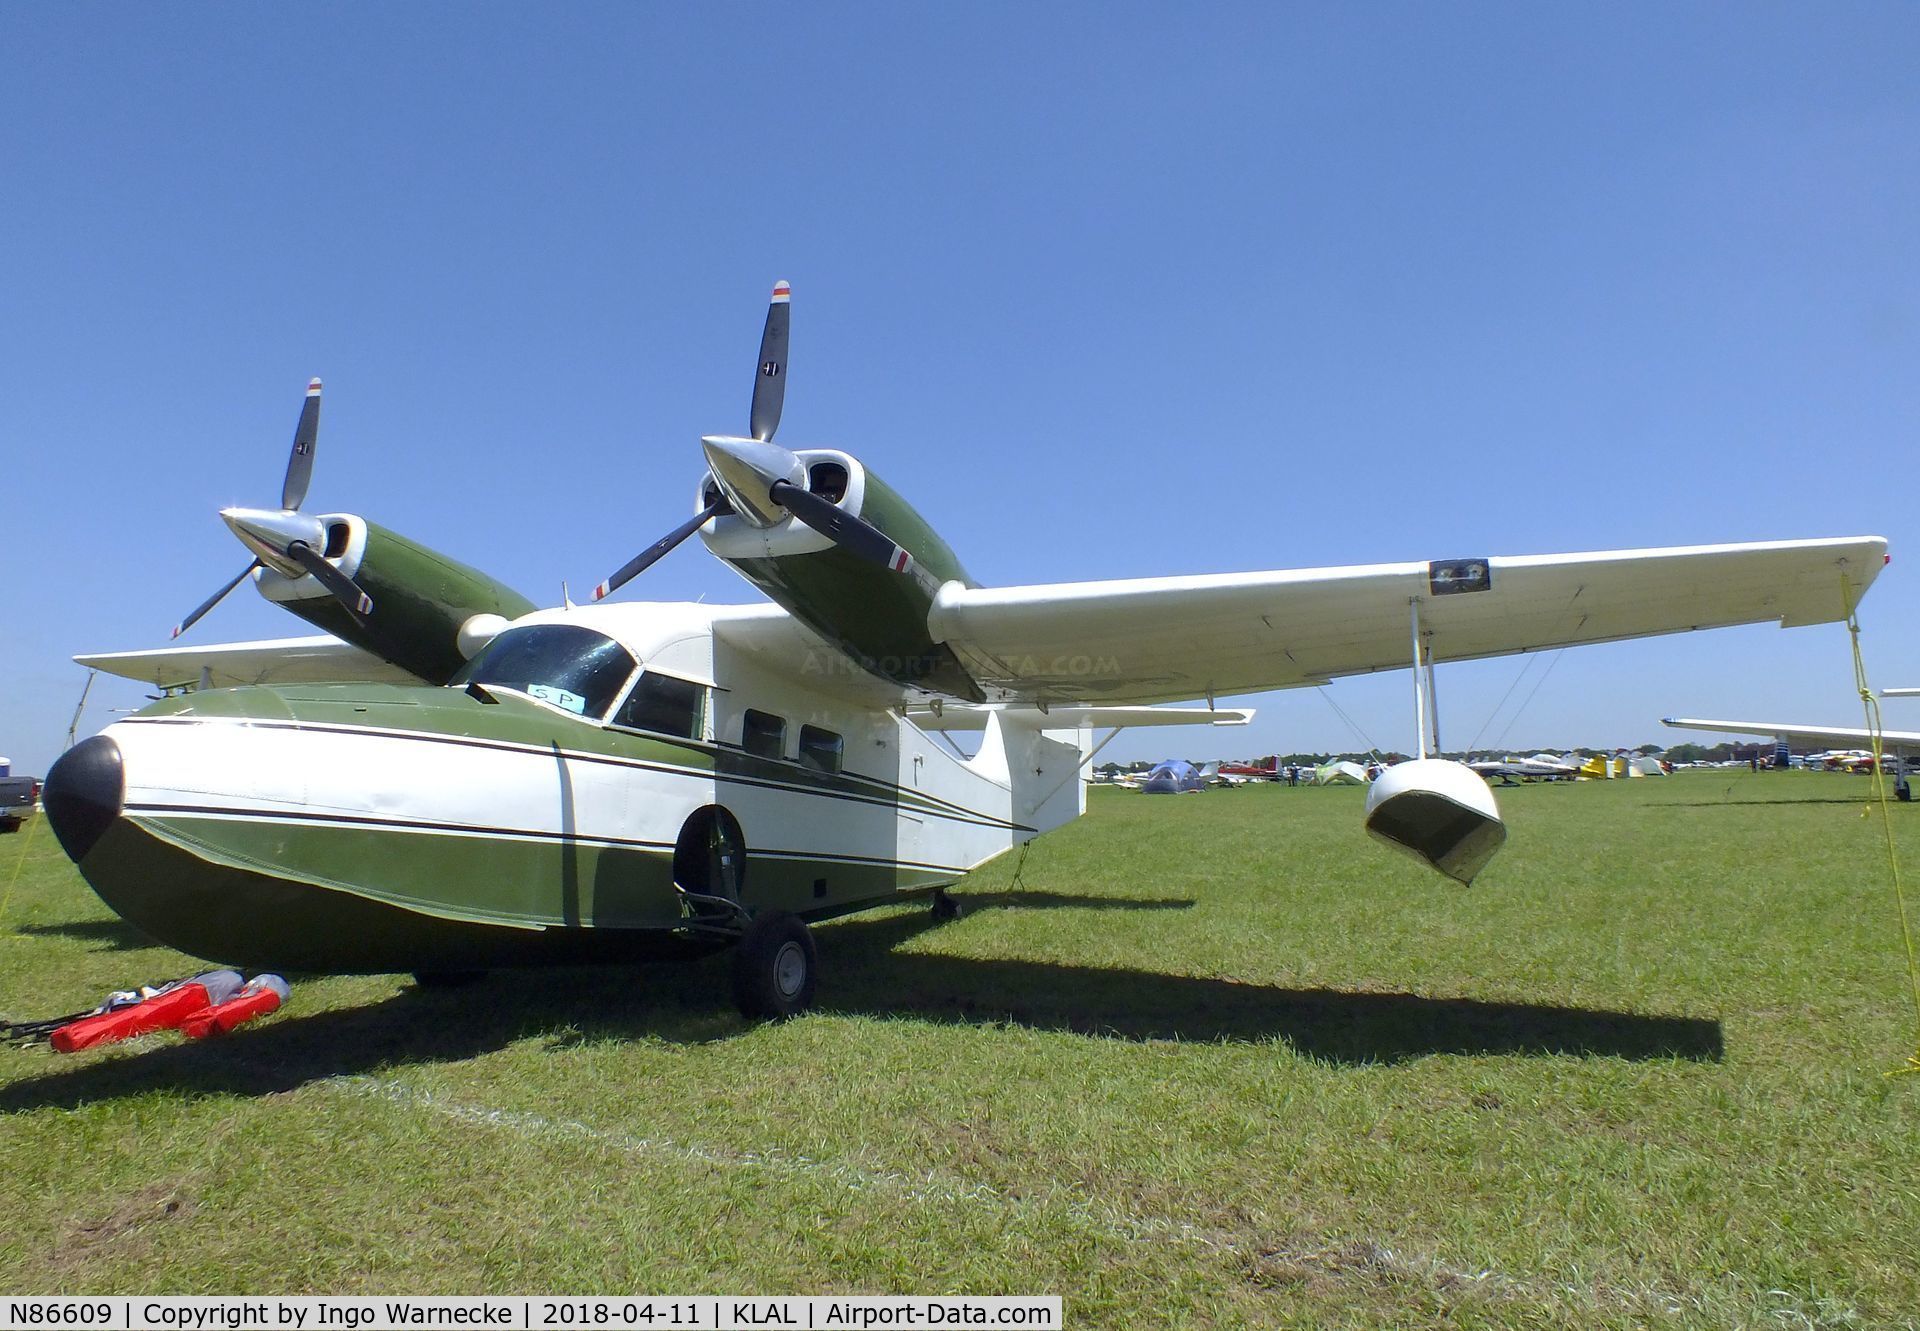 N86609, 1946 Grumman G-44A Widgeon C/N 1435, Grumman G-44A Gosling (converted to Continental IO-470 engines) at 2018 Sun 'n Fun, Lakeland FL